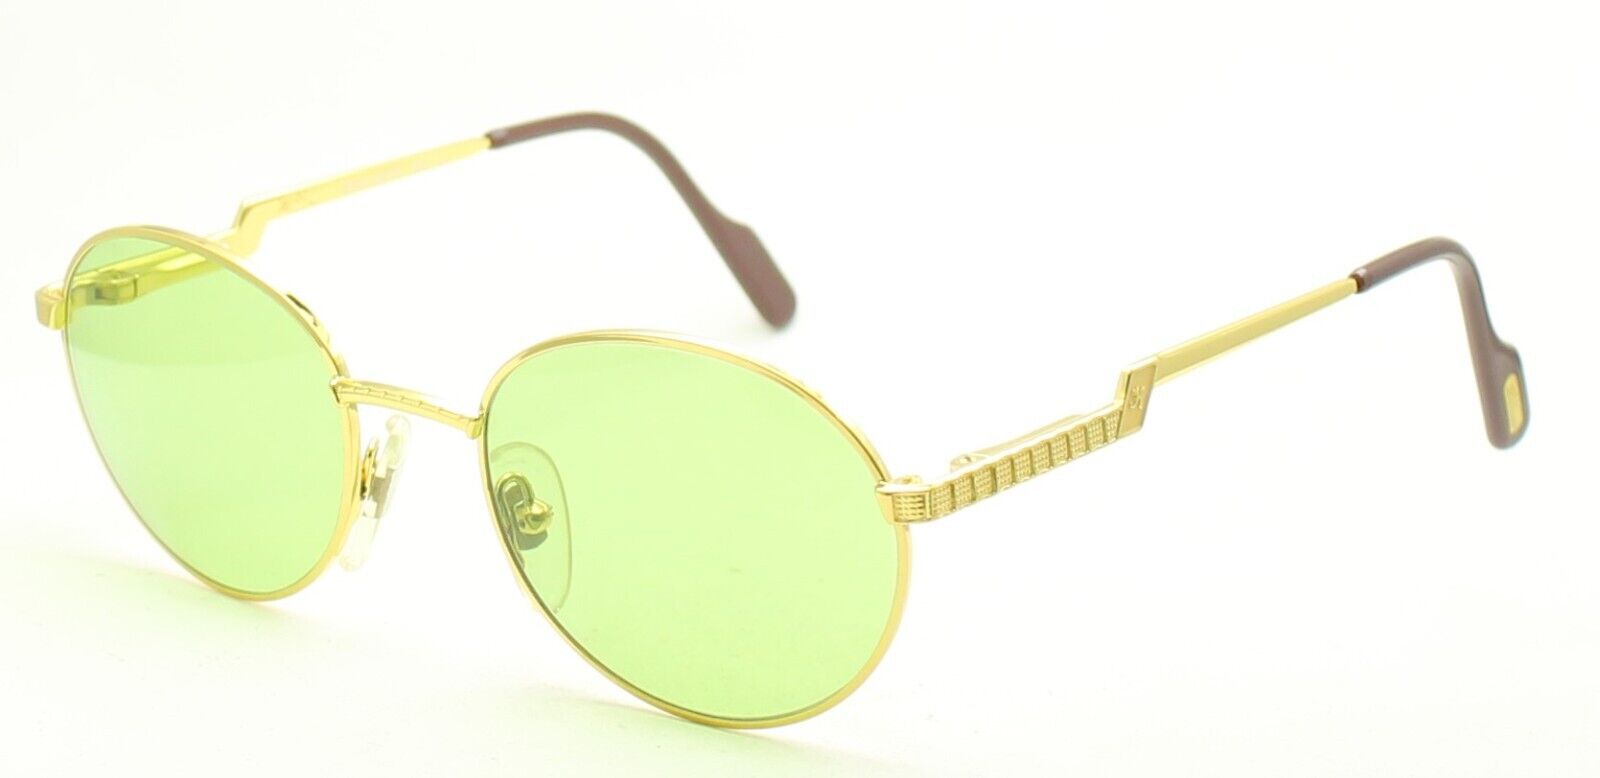 CHANEL | Accessories | Chanel Vintage Sunglasses Super Rare Paris Hilton  Vibes | Poshmark